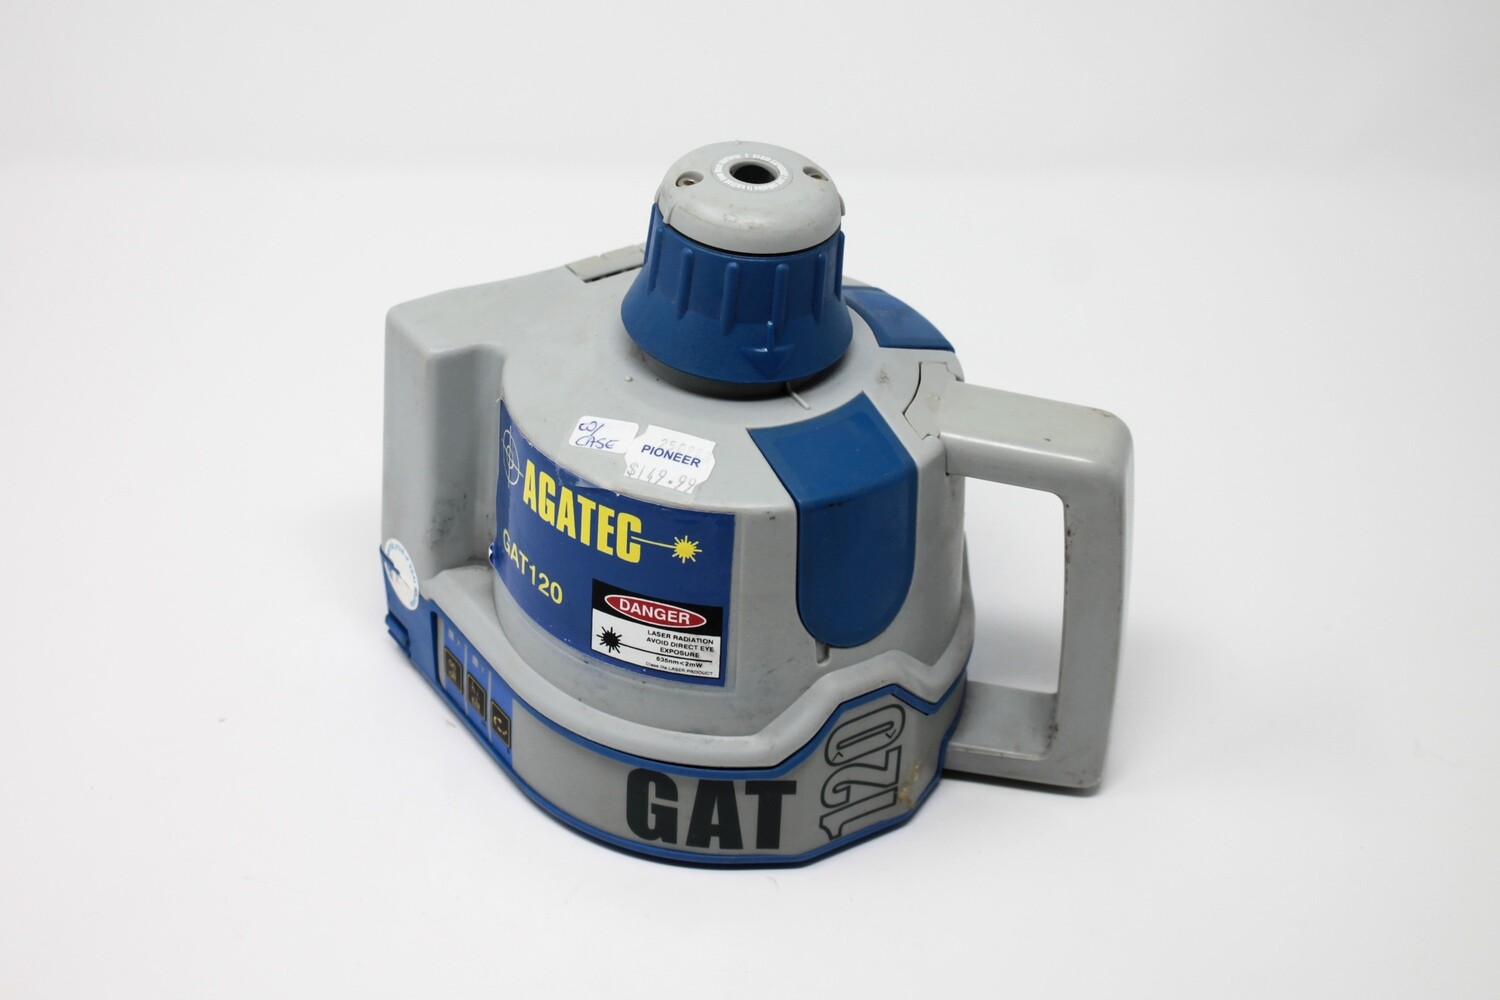 Agatec GAT120 Rotary Laser Level